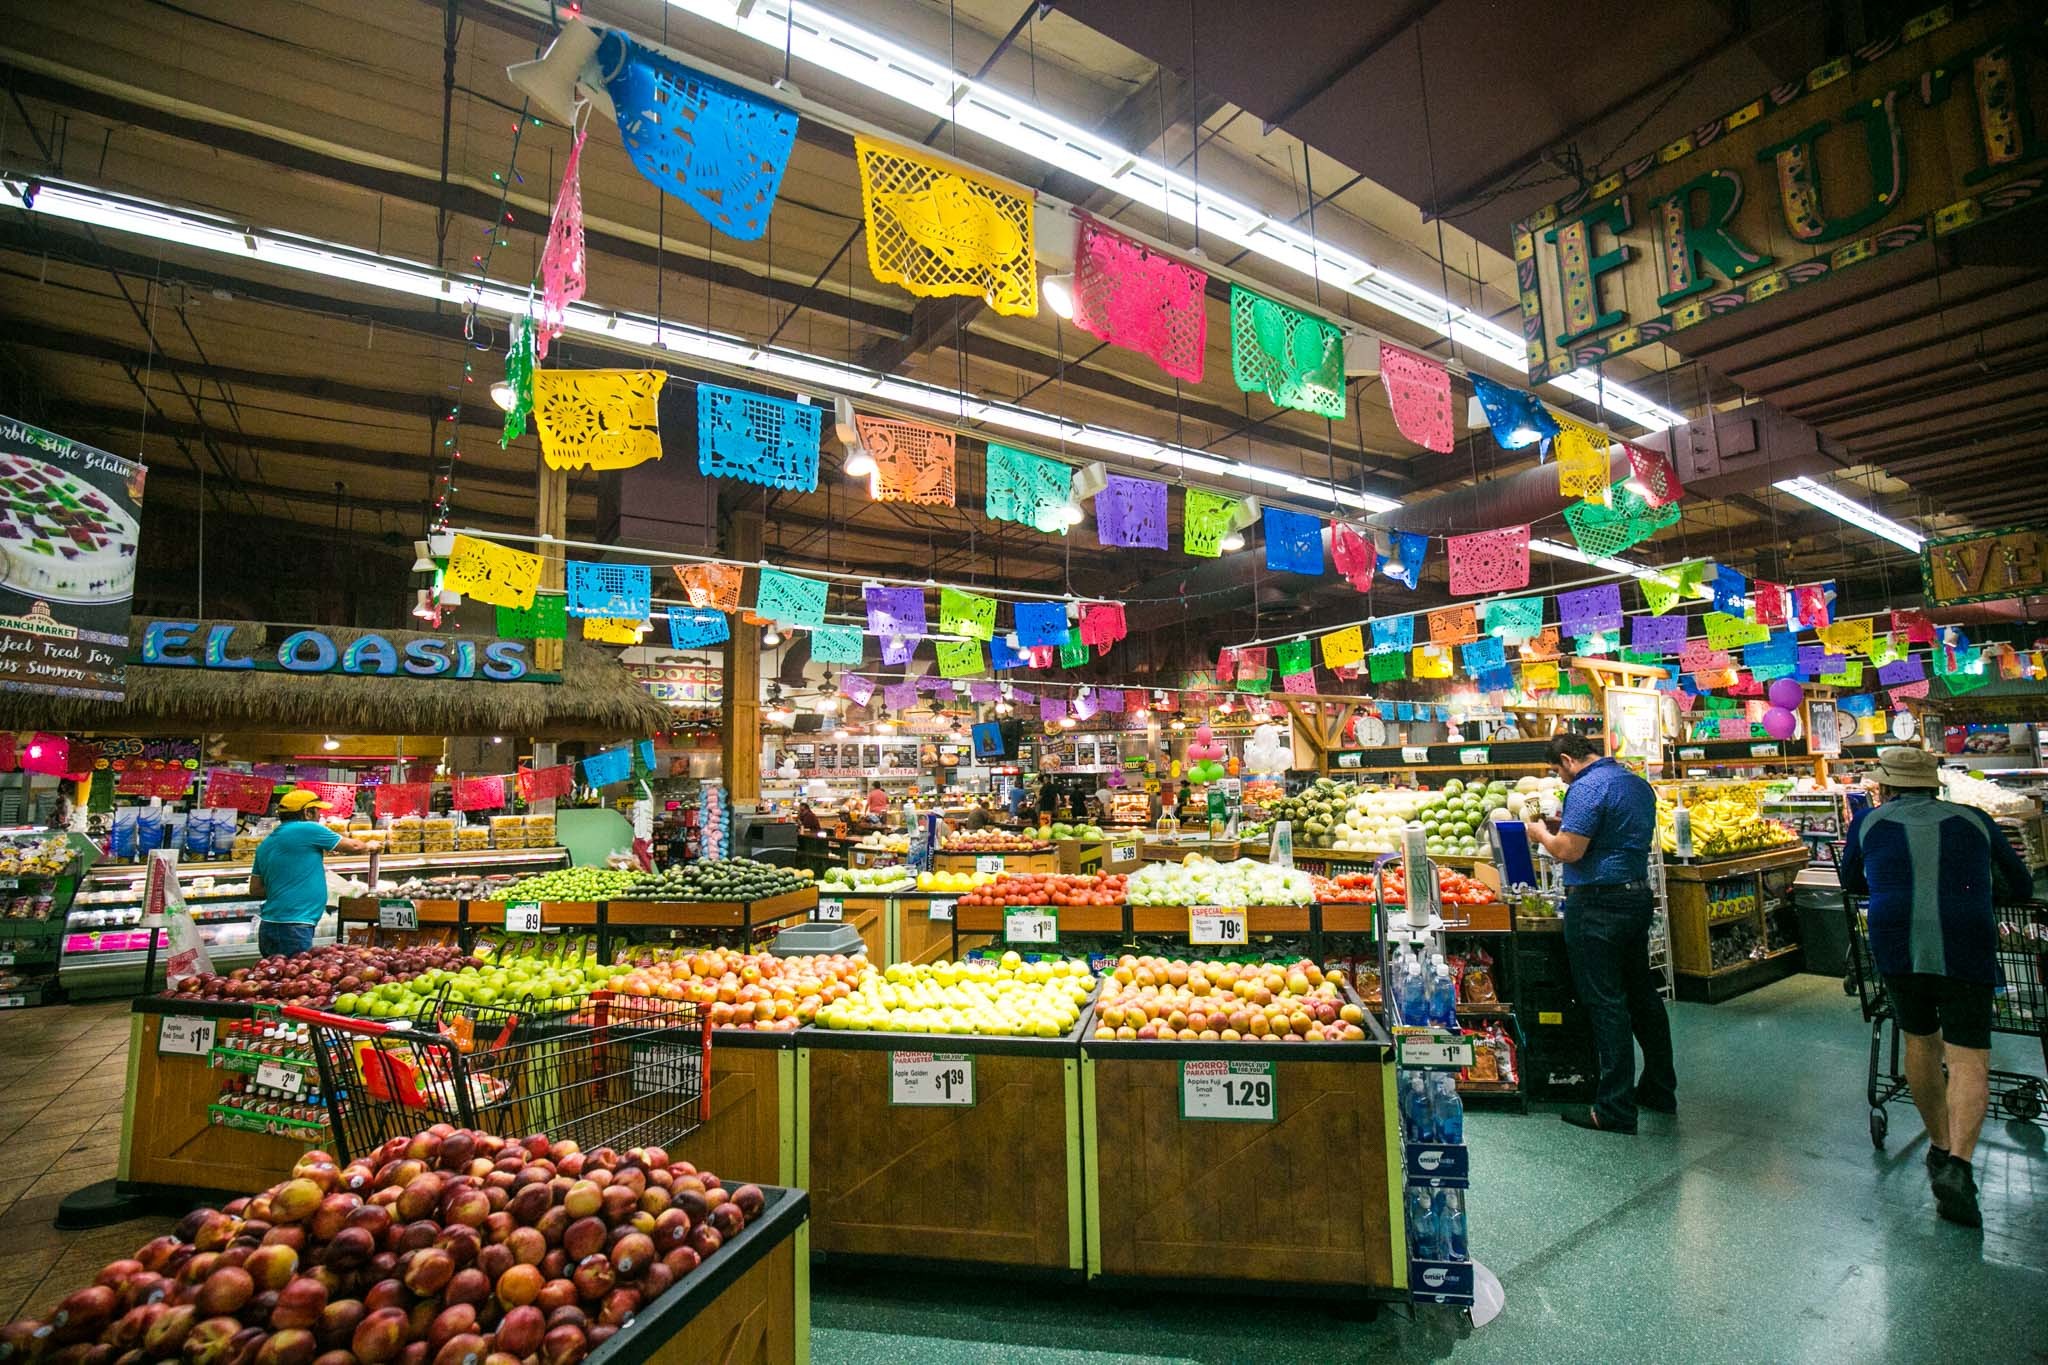 Mexican market near me